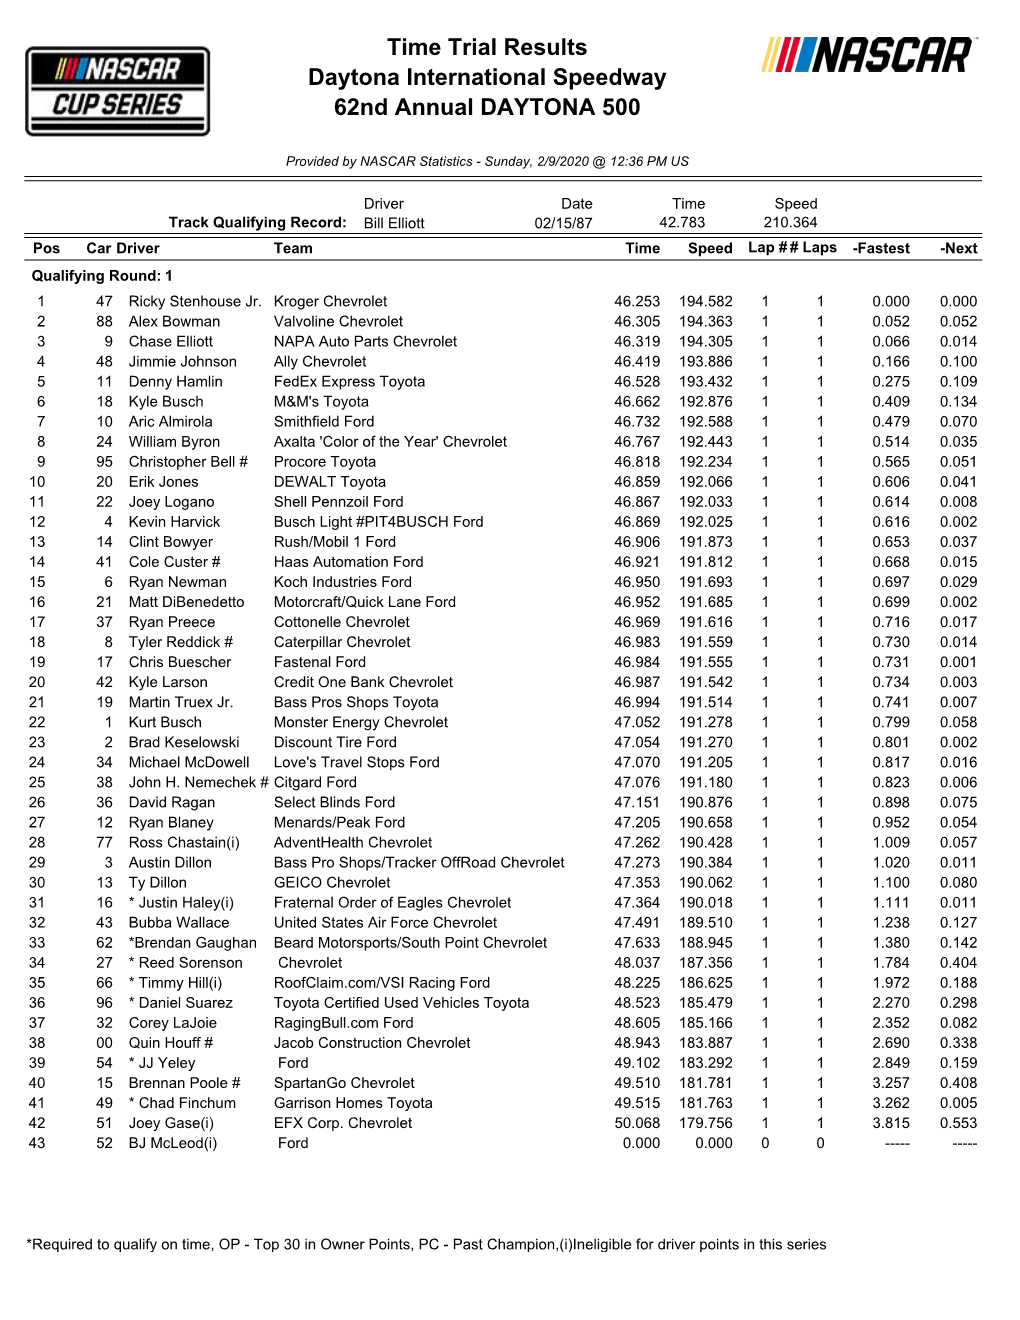 Time Trial Results Daytona International Speedway 62Nd Annual DAYTONA 500